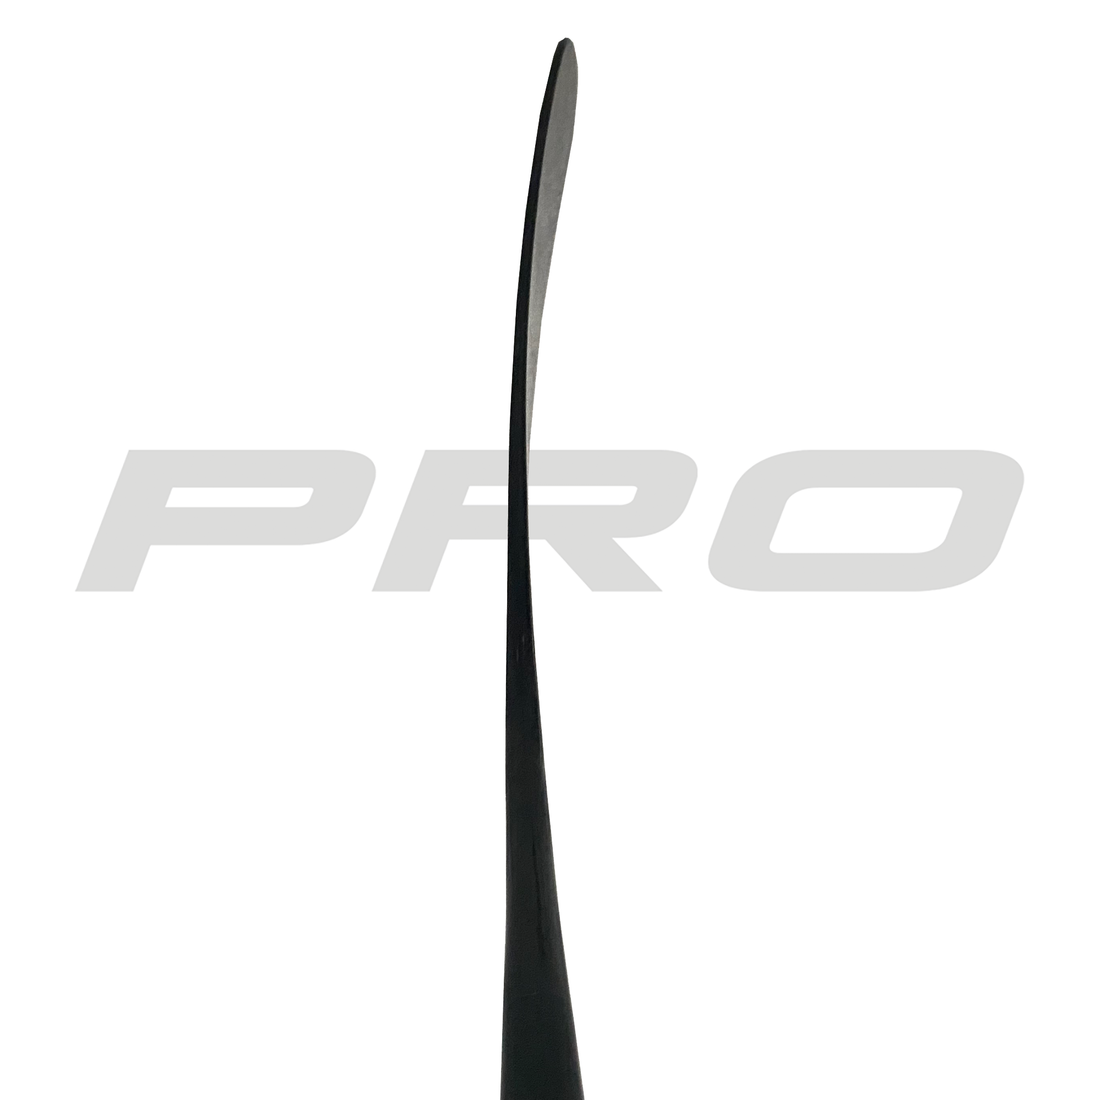 PRO2299 (ST: Draisaitl Pro) - Red Line (375 G) - Pro Stock Hockey Stick - Left